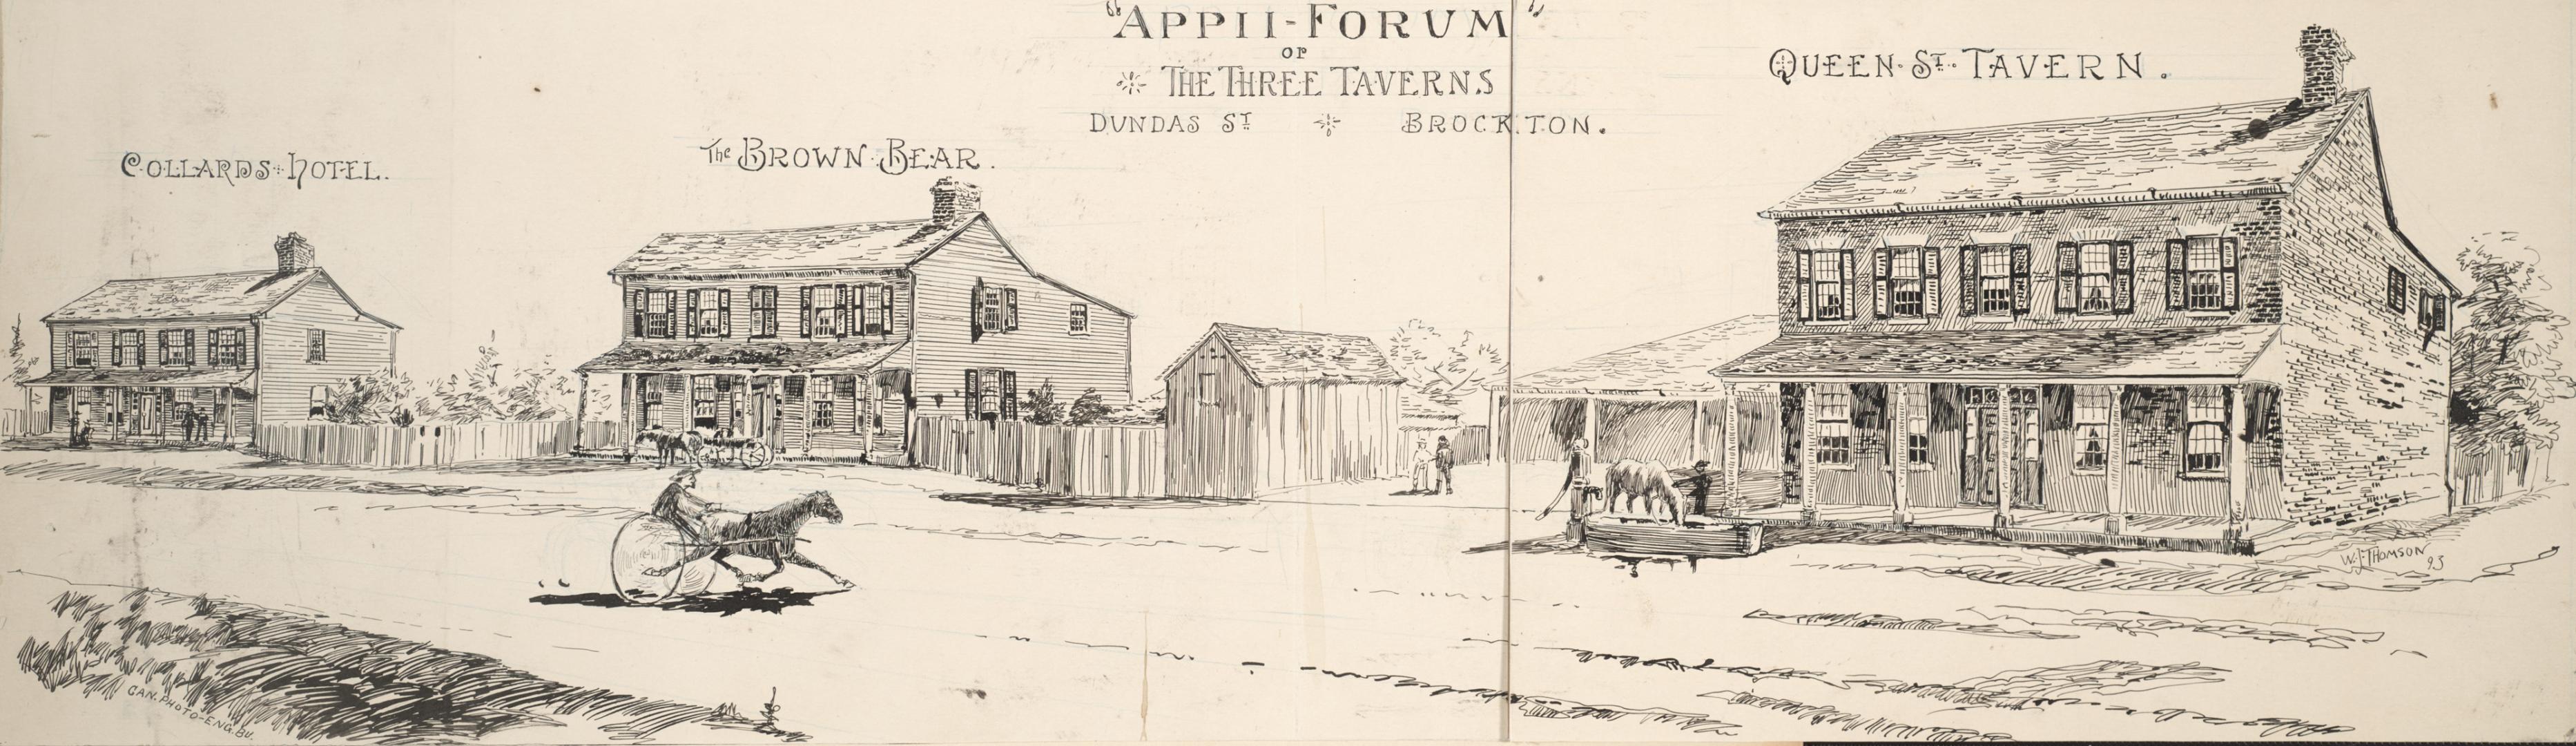 Appii Forum or the Three Taverns, Dundas Street, Brockton (Toronto)